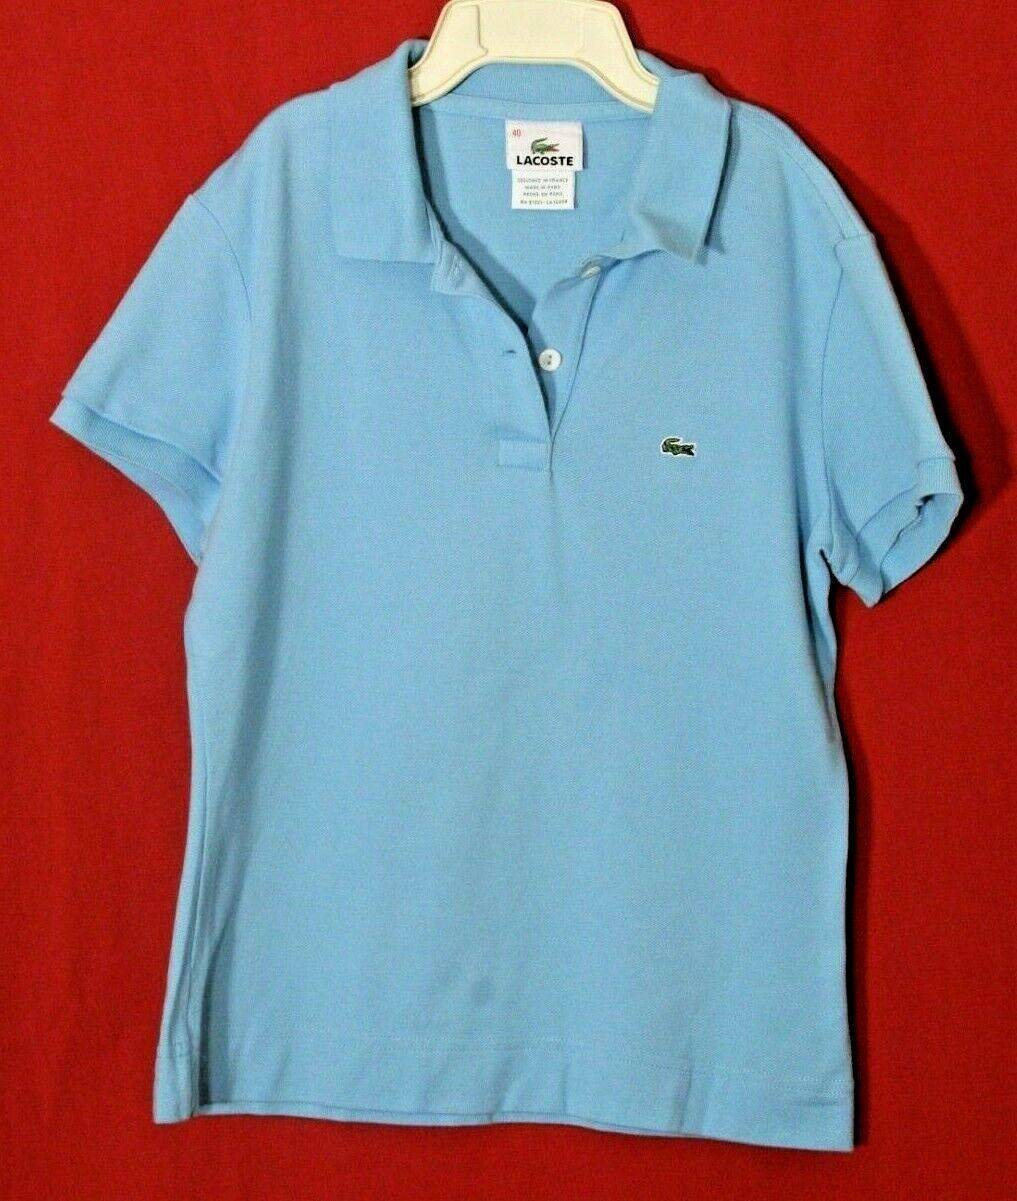 Primary image for Lacoste Women's Preppy Classic Pastel Aqua Polo Golf Shirt Shirt Size 40 US M